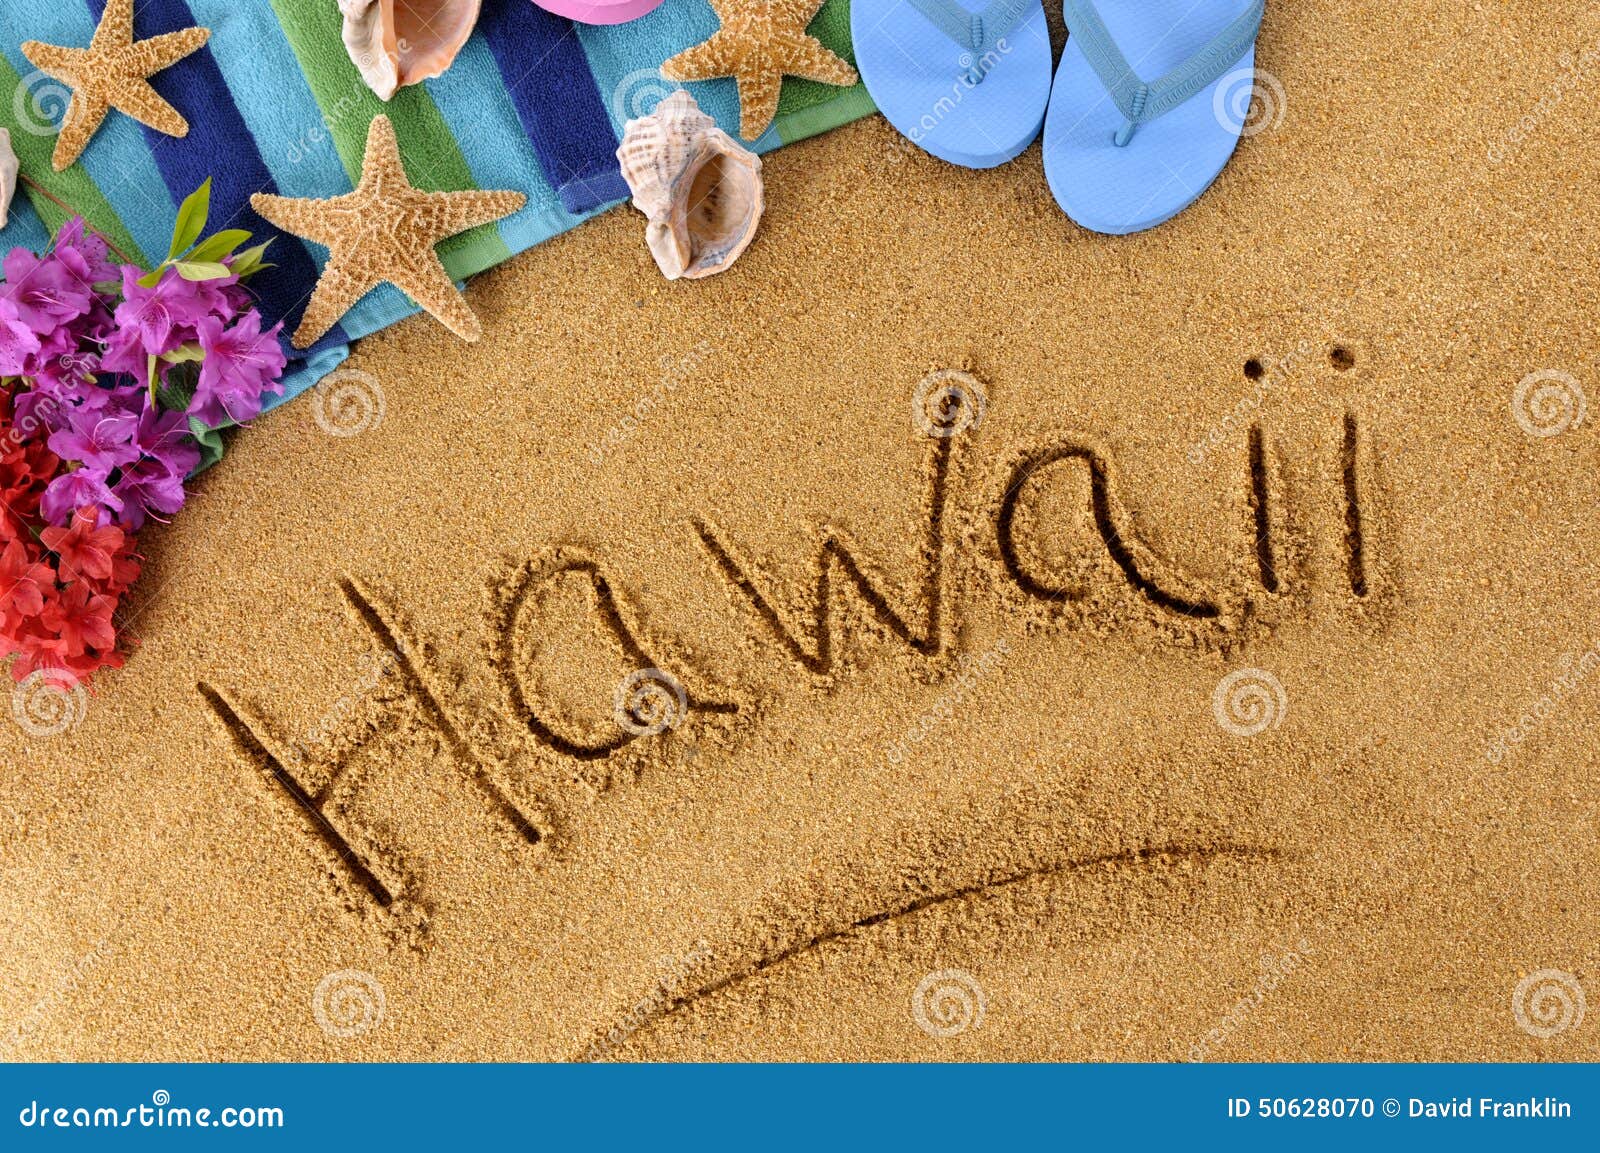 hawaii beach writing